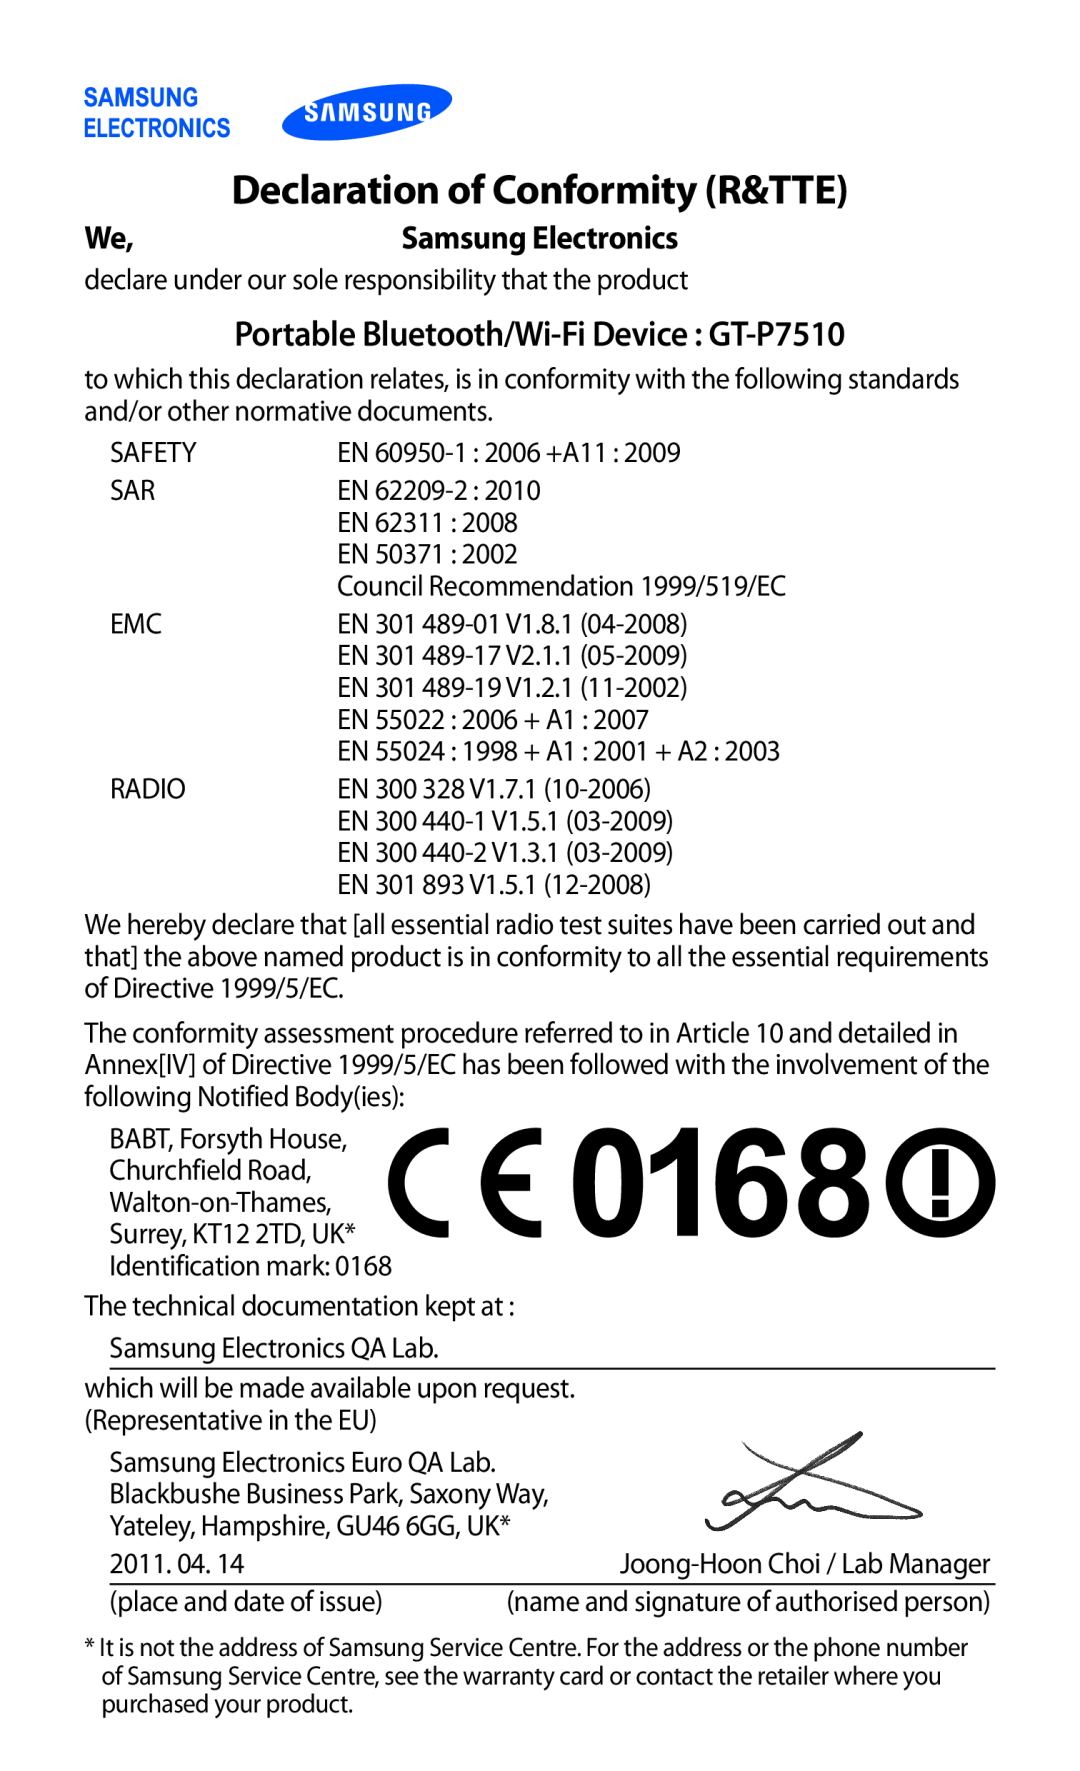 Samsung user manual Declaration of Conformity R&TTE, Portable Bluetooth/Wi-Fi Device GT-P7510 